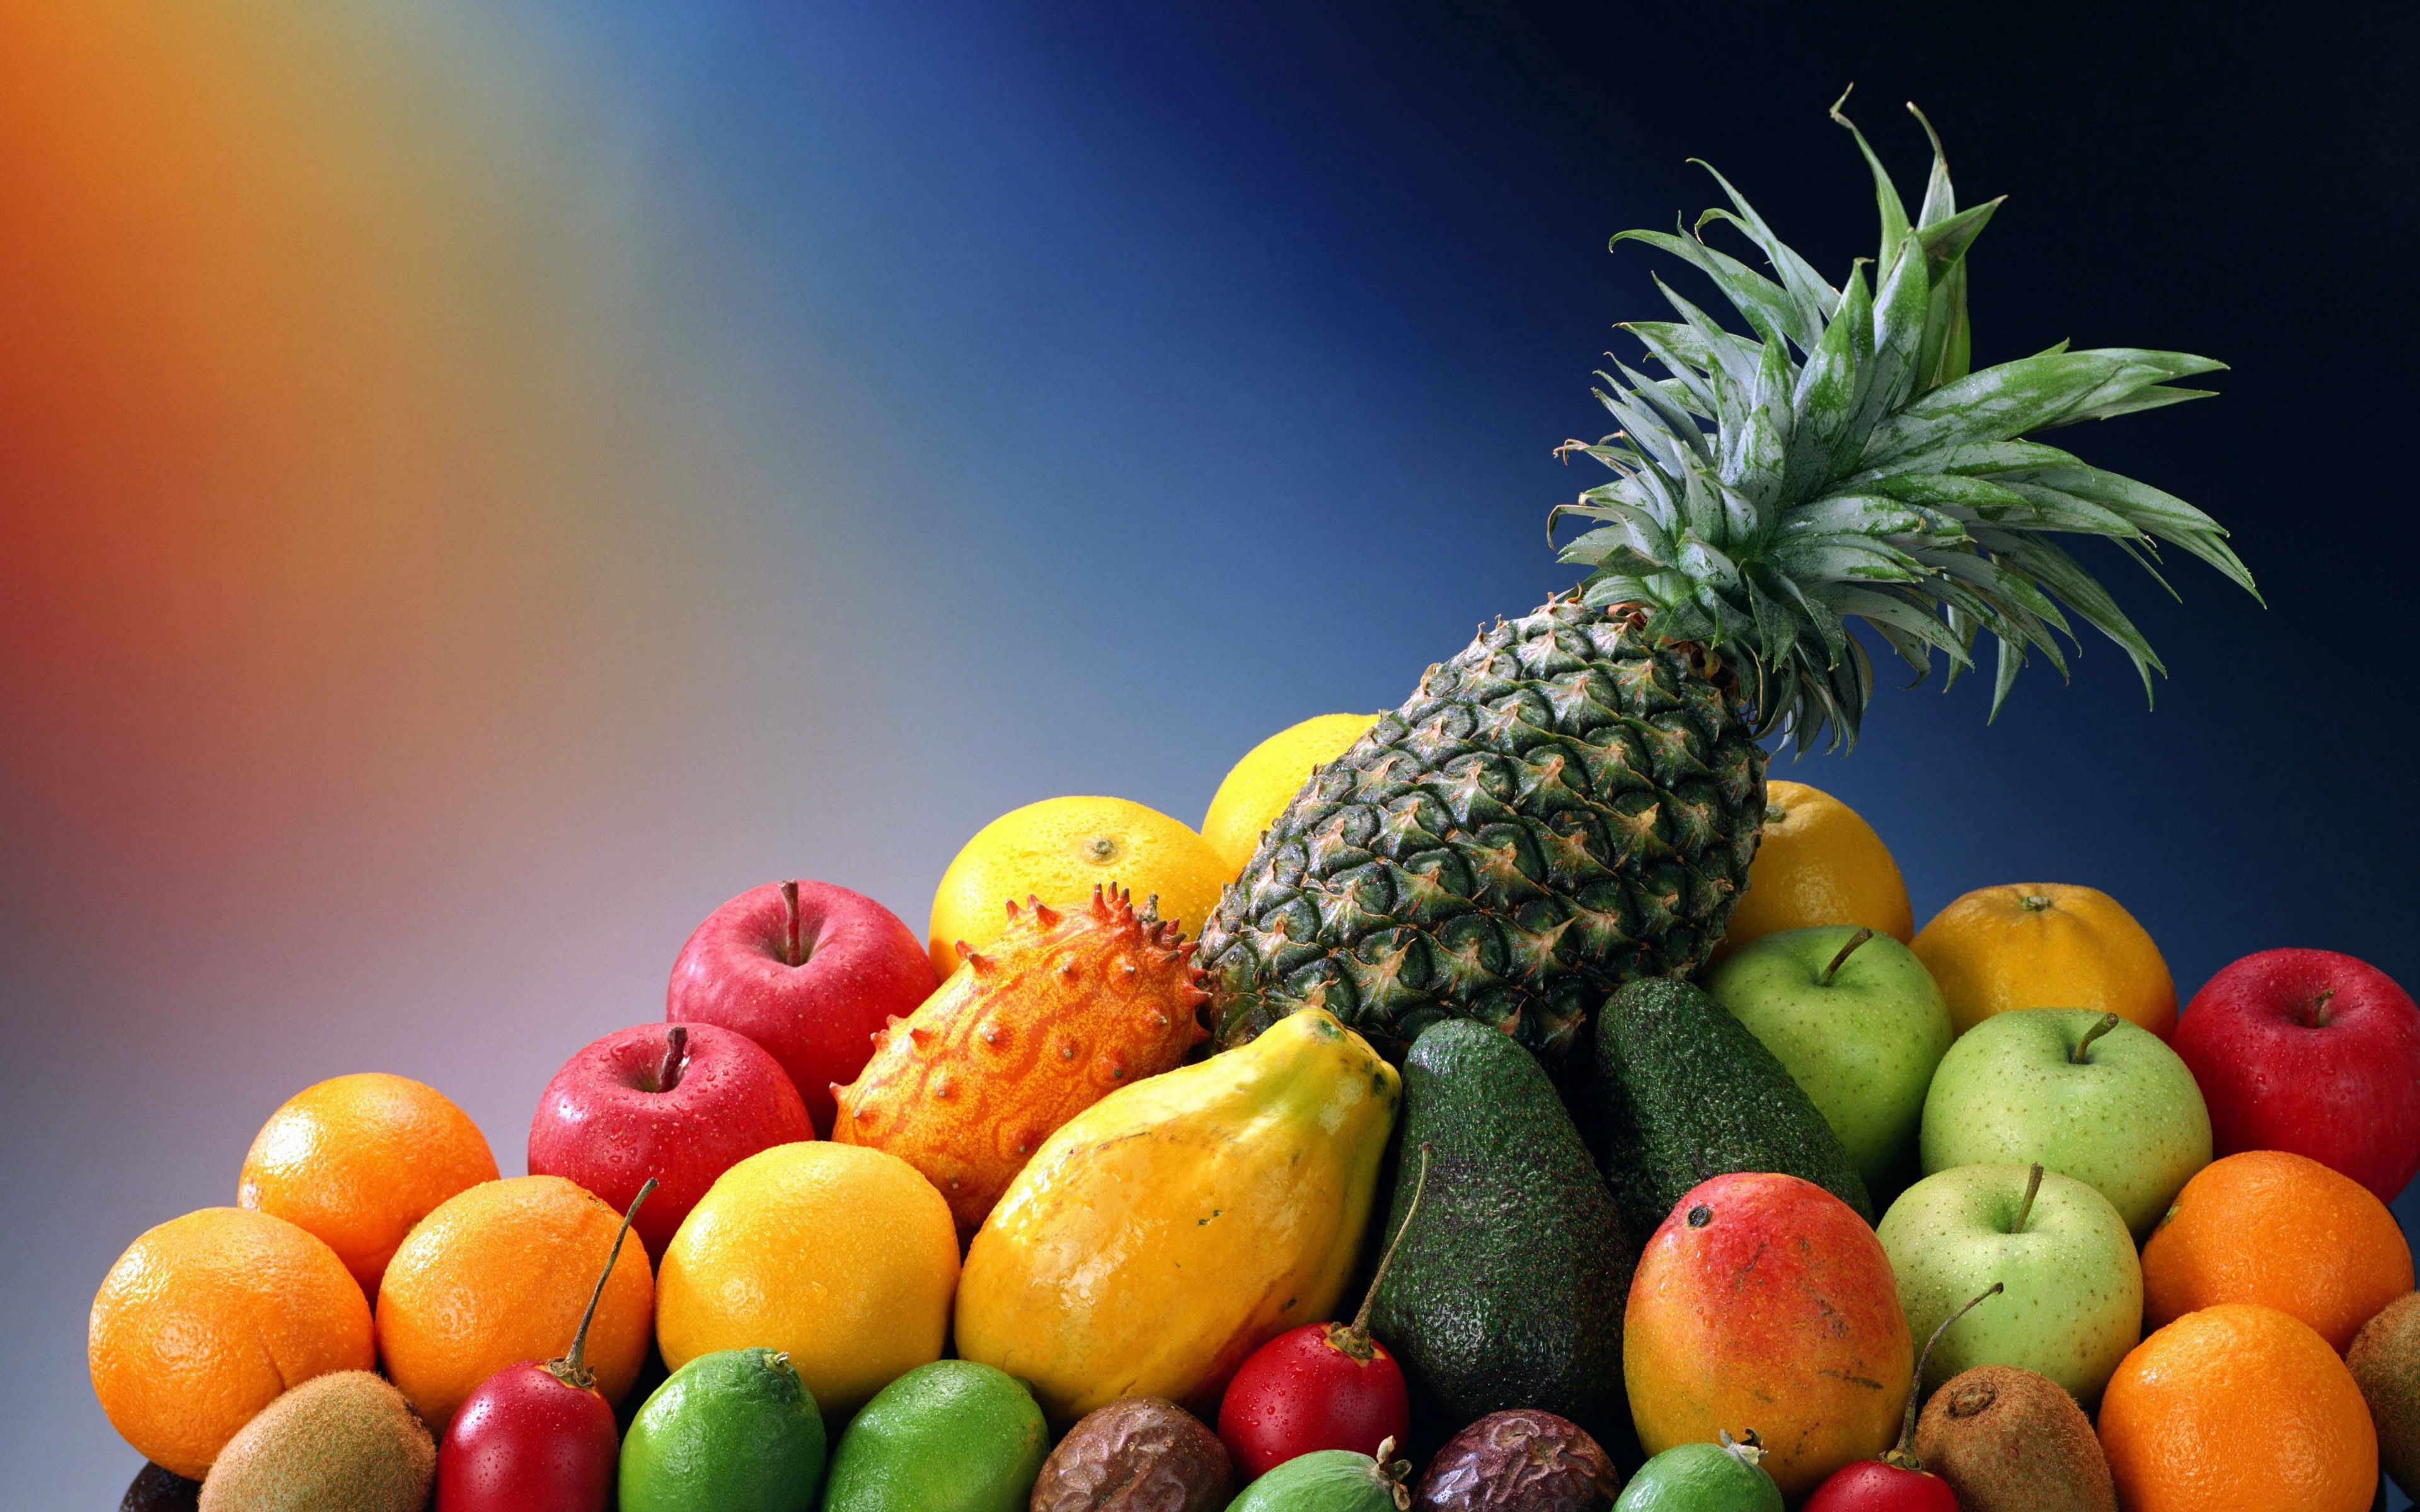 Download wallpaper 3840x2400 fruit, exotic, pineapple, apple, avocado, kiwi  4k ultra hd 16:10 hd background